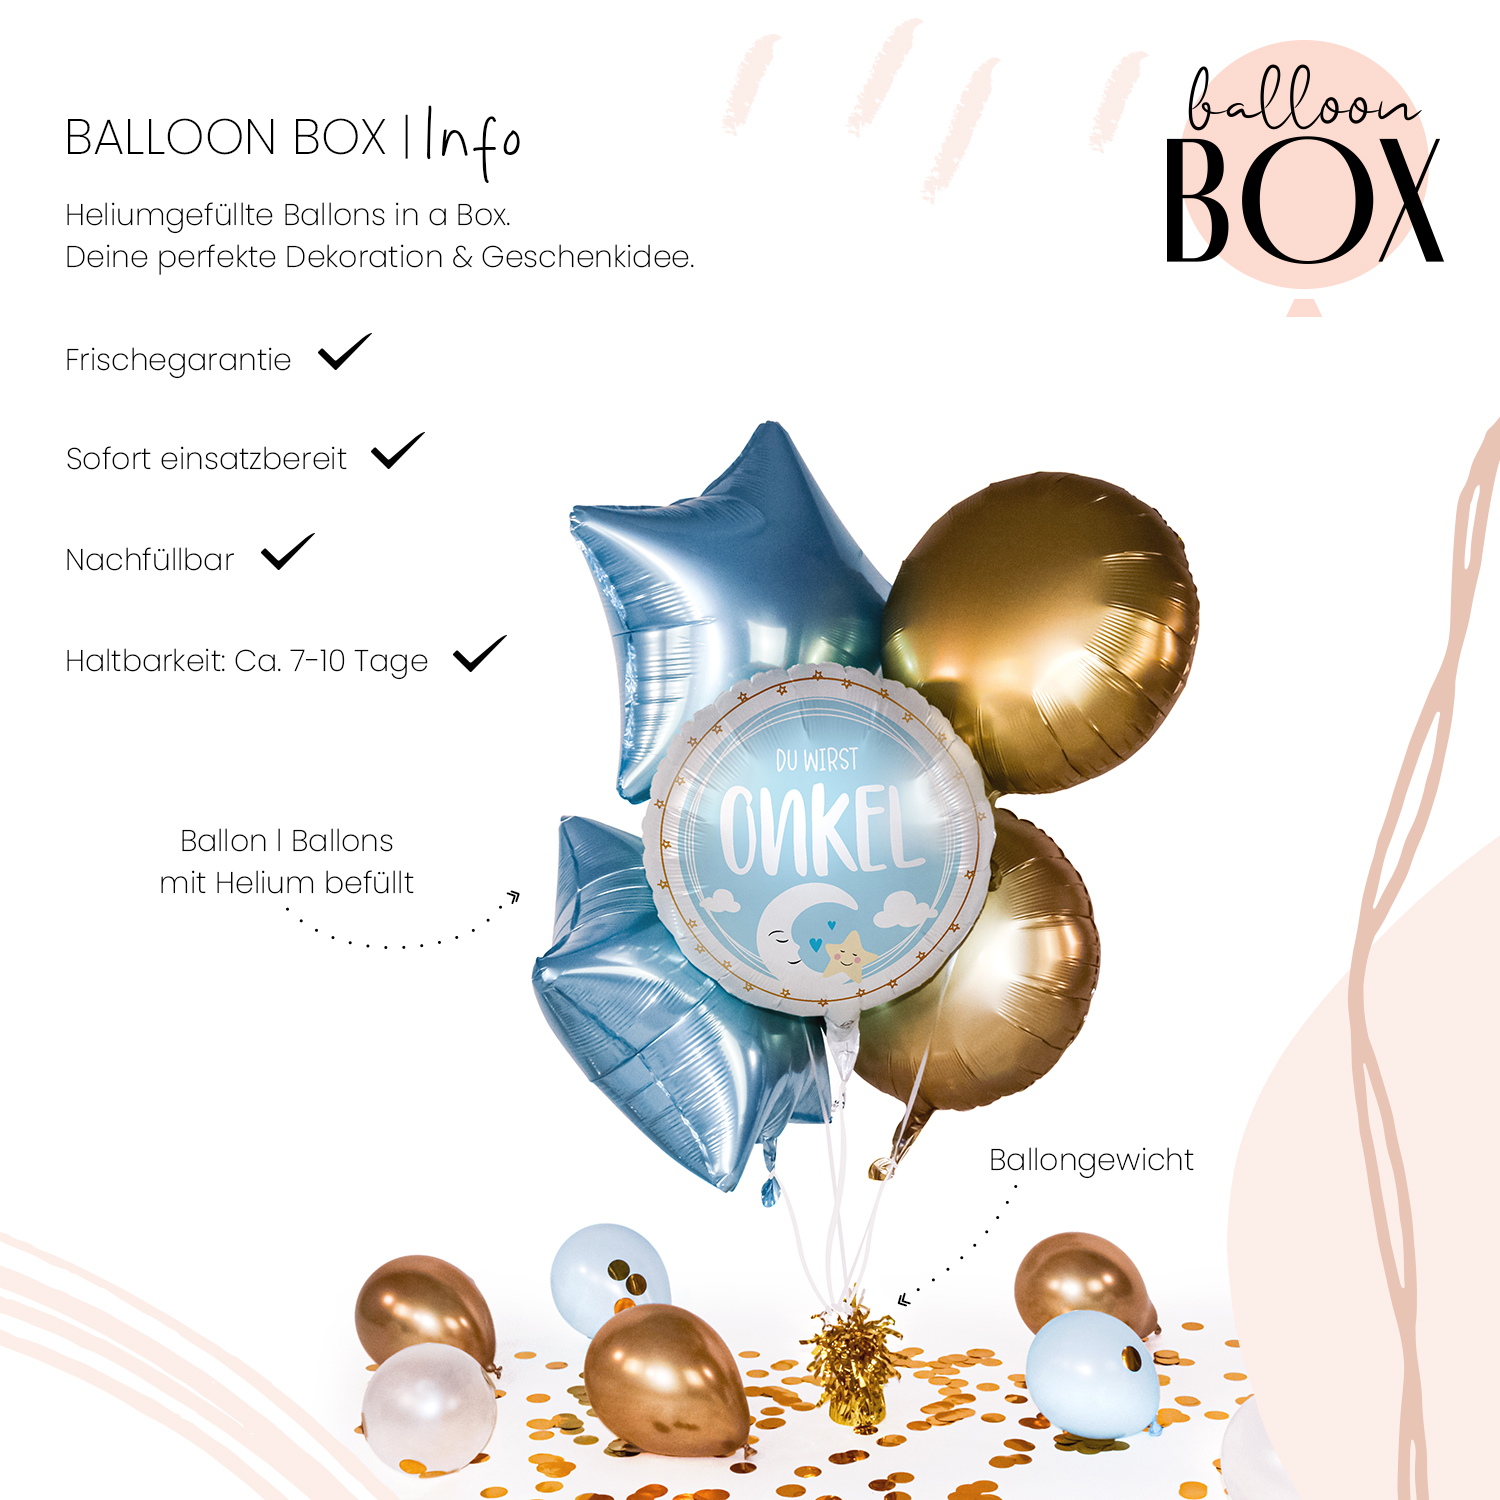 Heliumballon in a Box - Du wirst Onkel